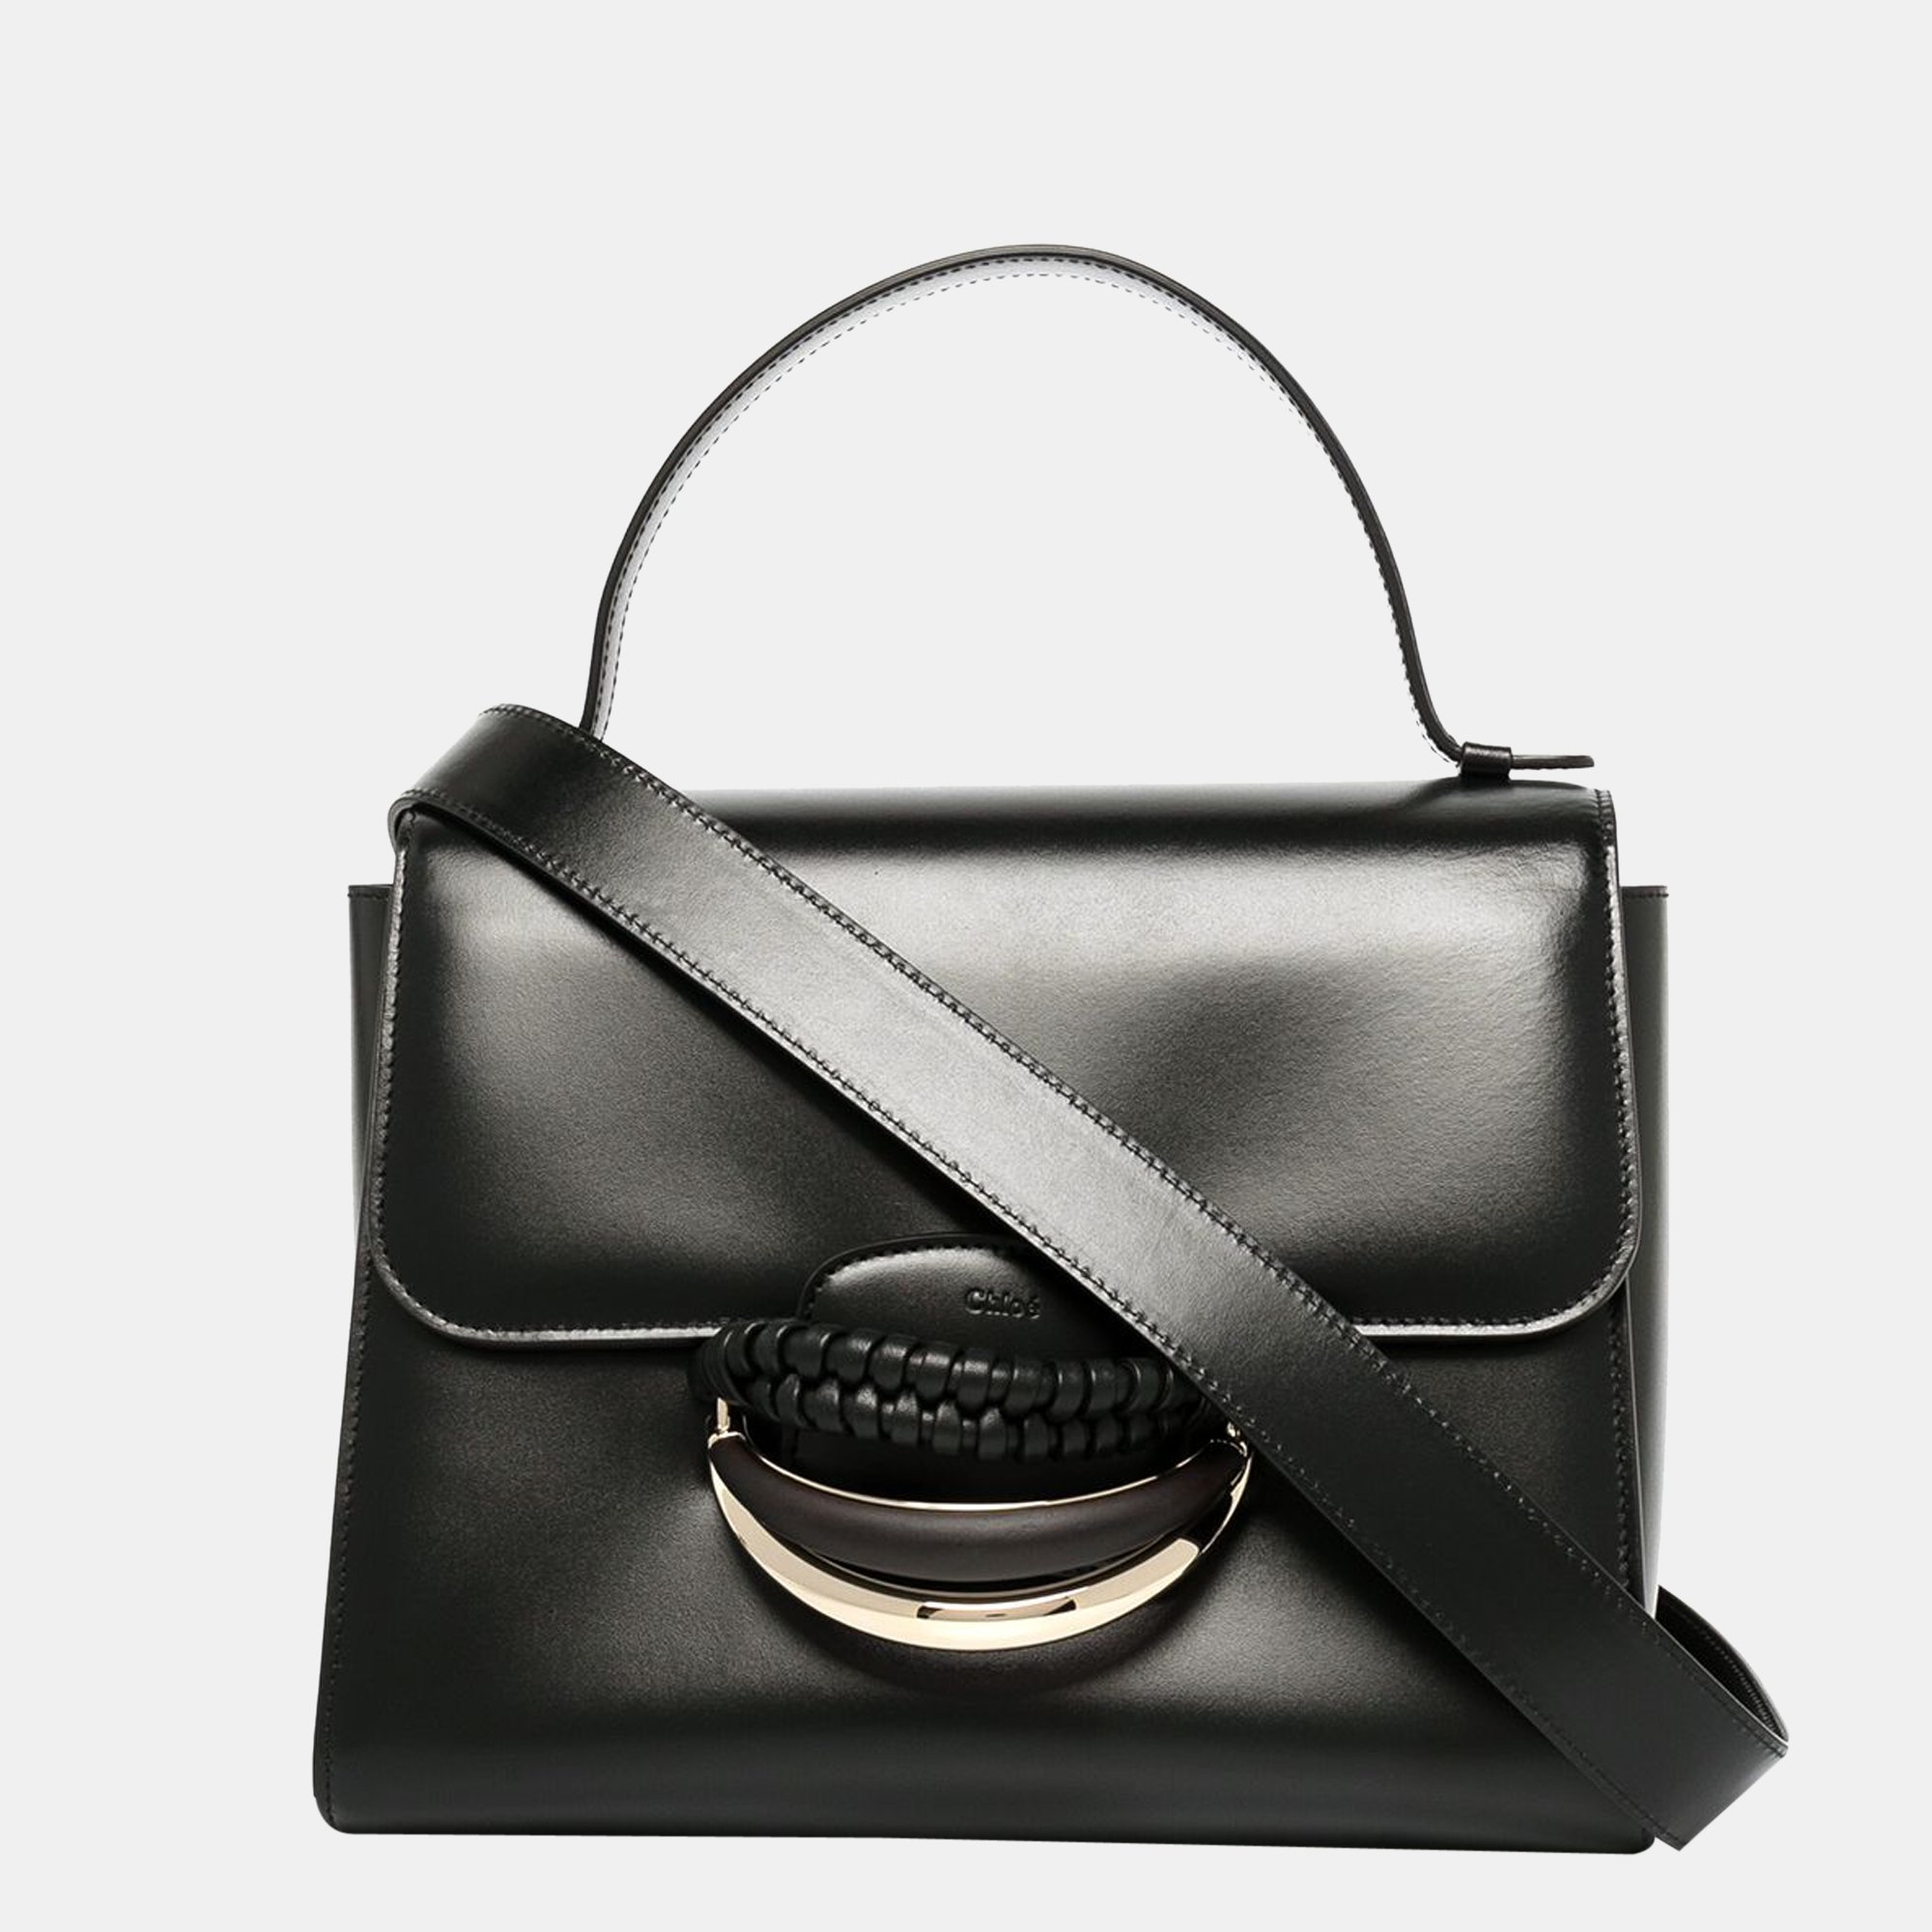 Chloe black - leather - crossbody bag